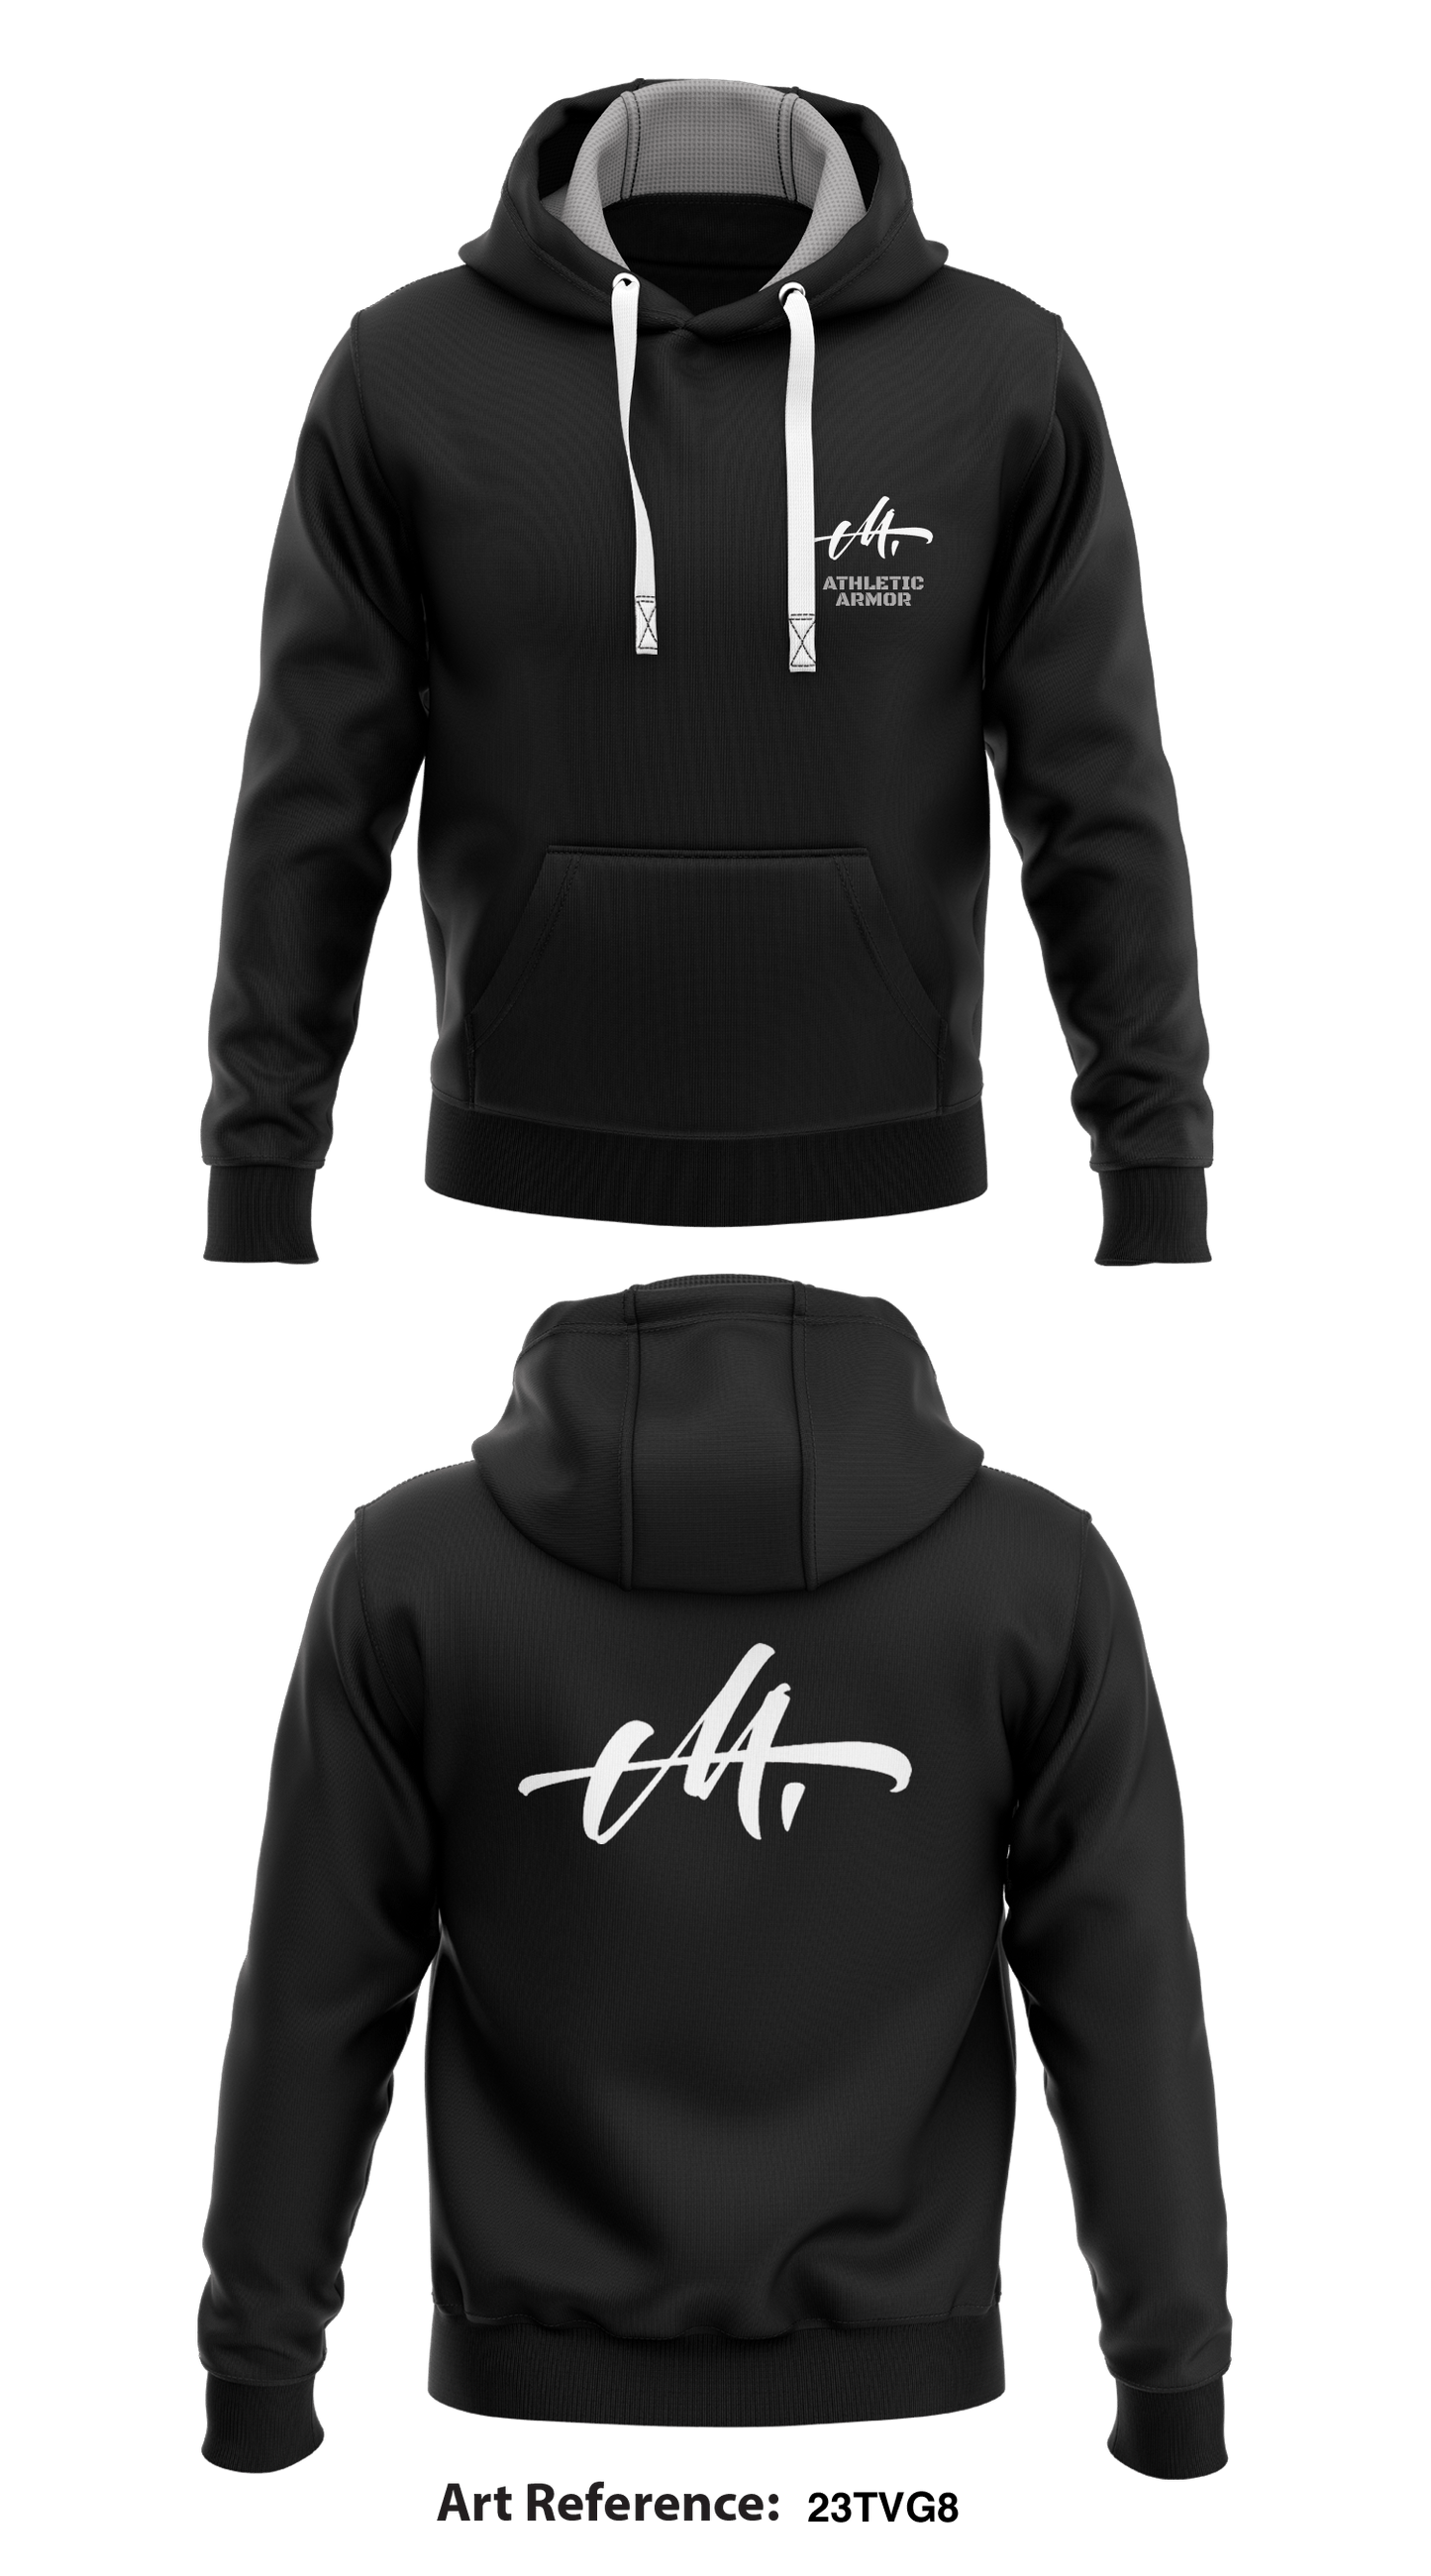 Athletic Armor  Core Men's Hooded Performance Sweatshirt - 23tVG8